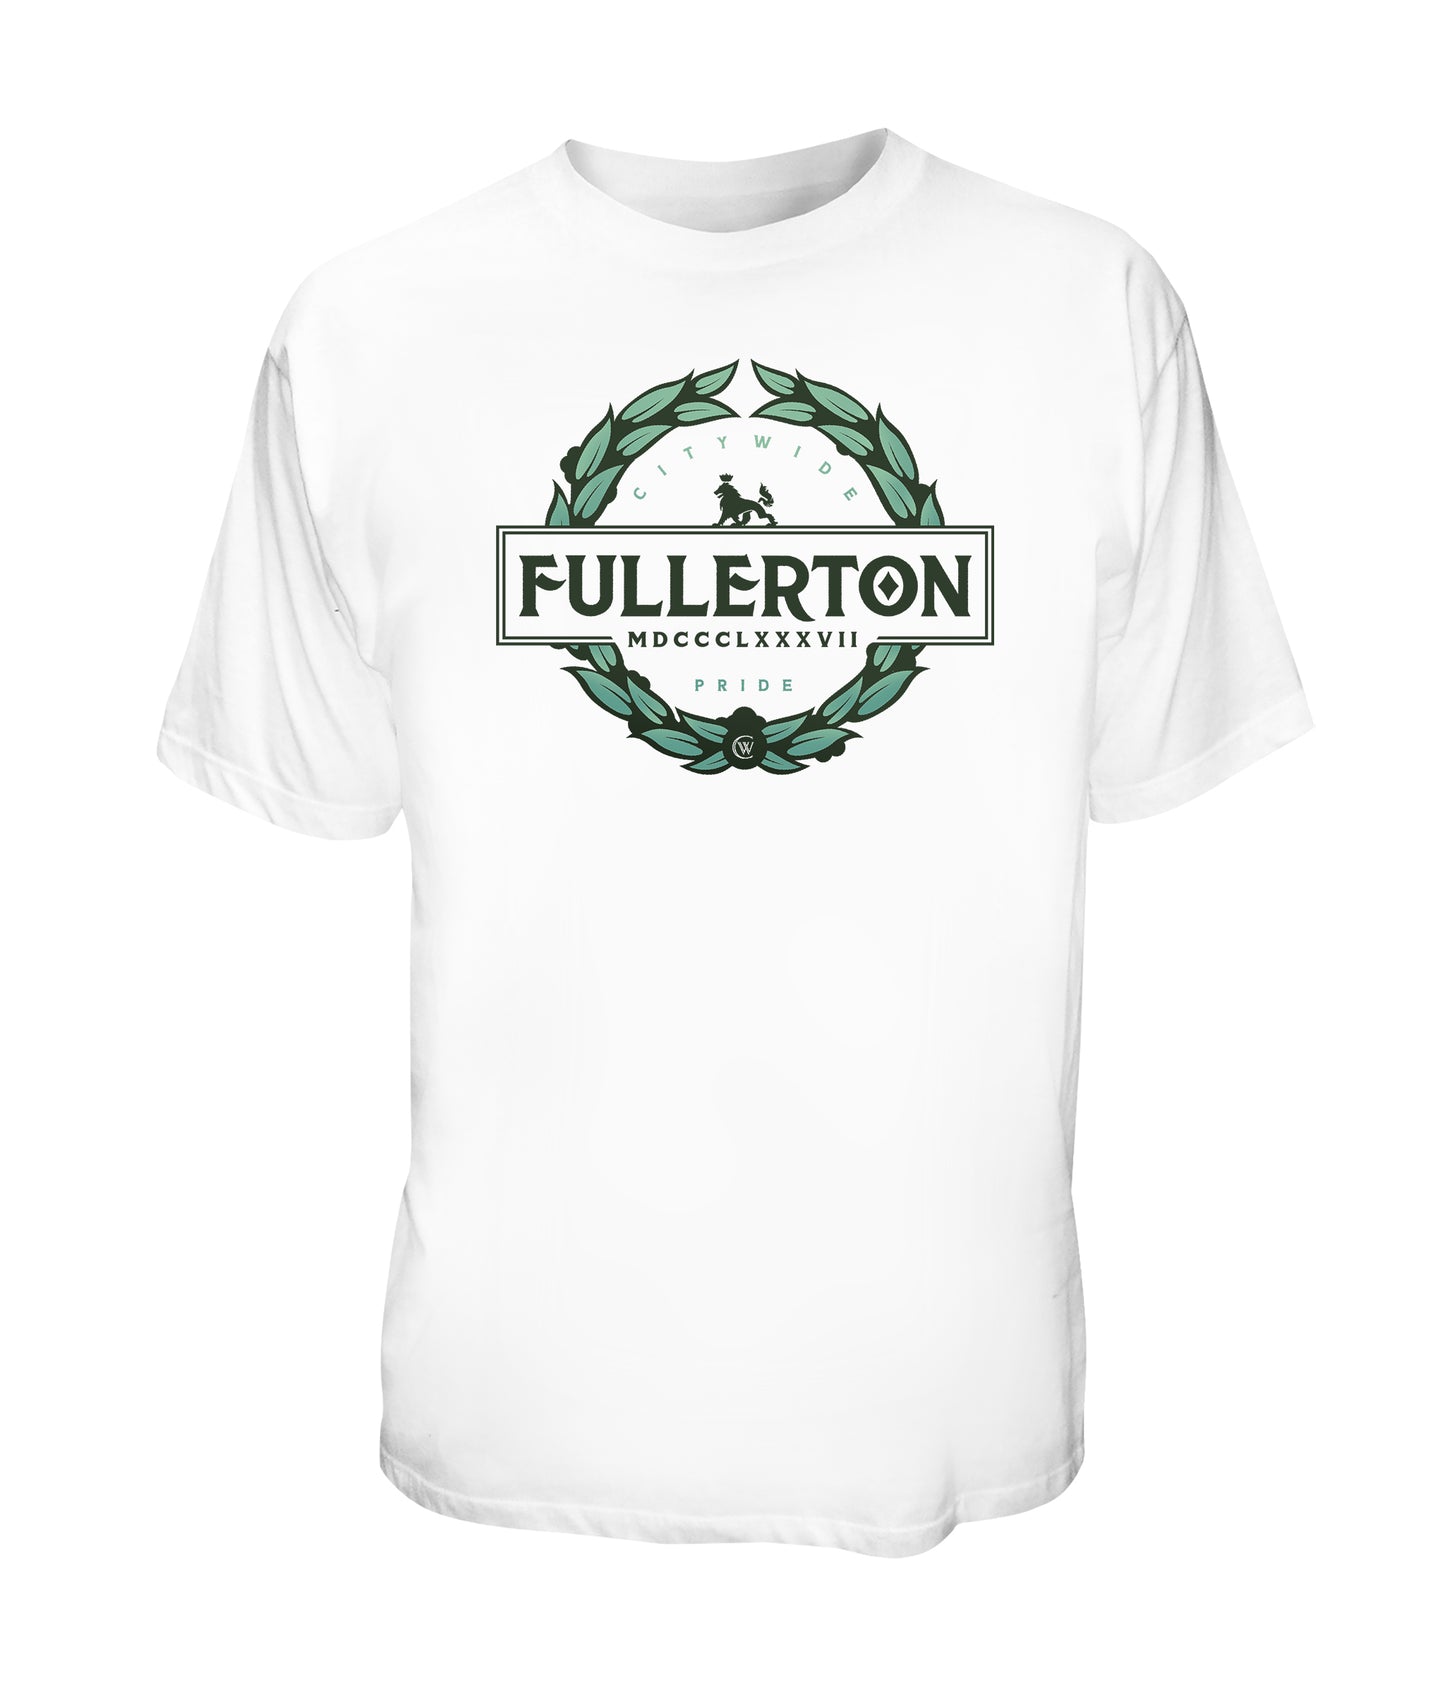 Fullerton The Pride